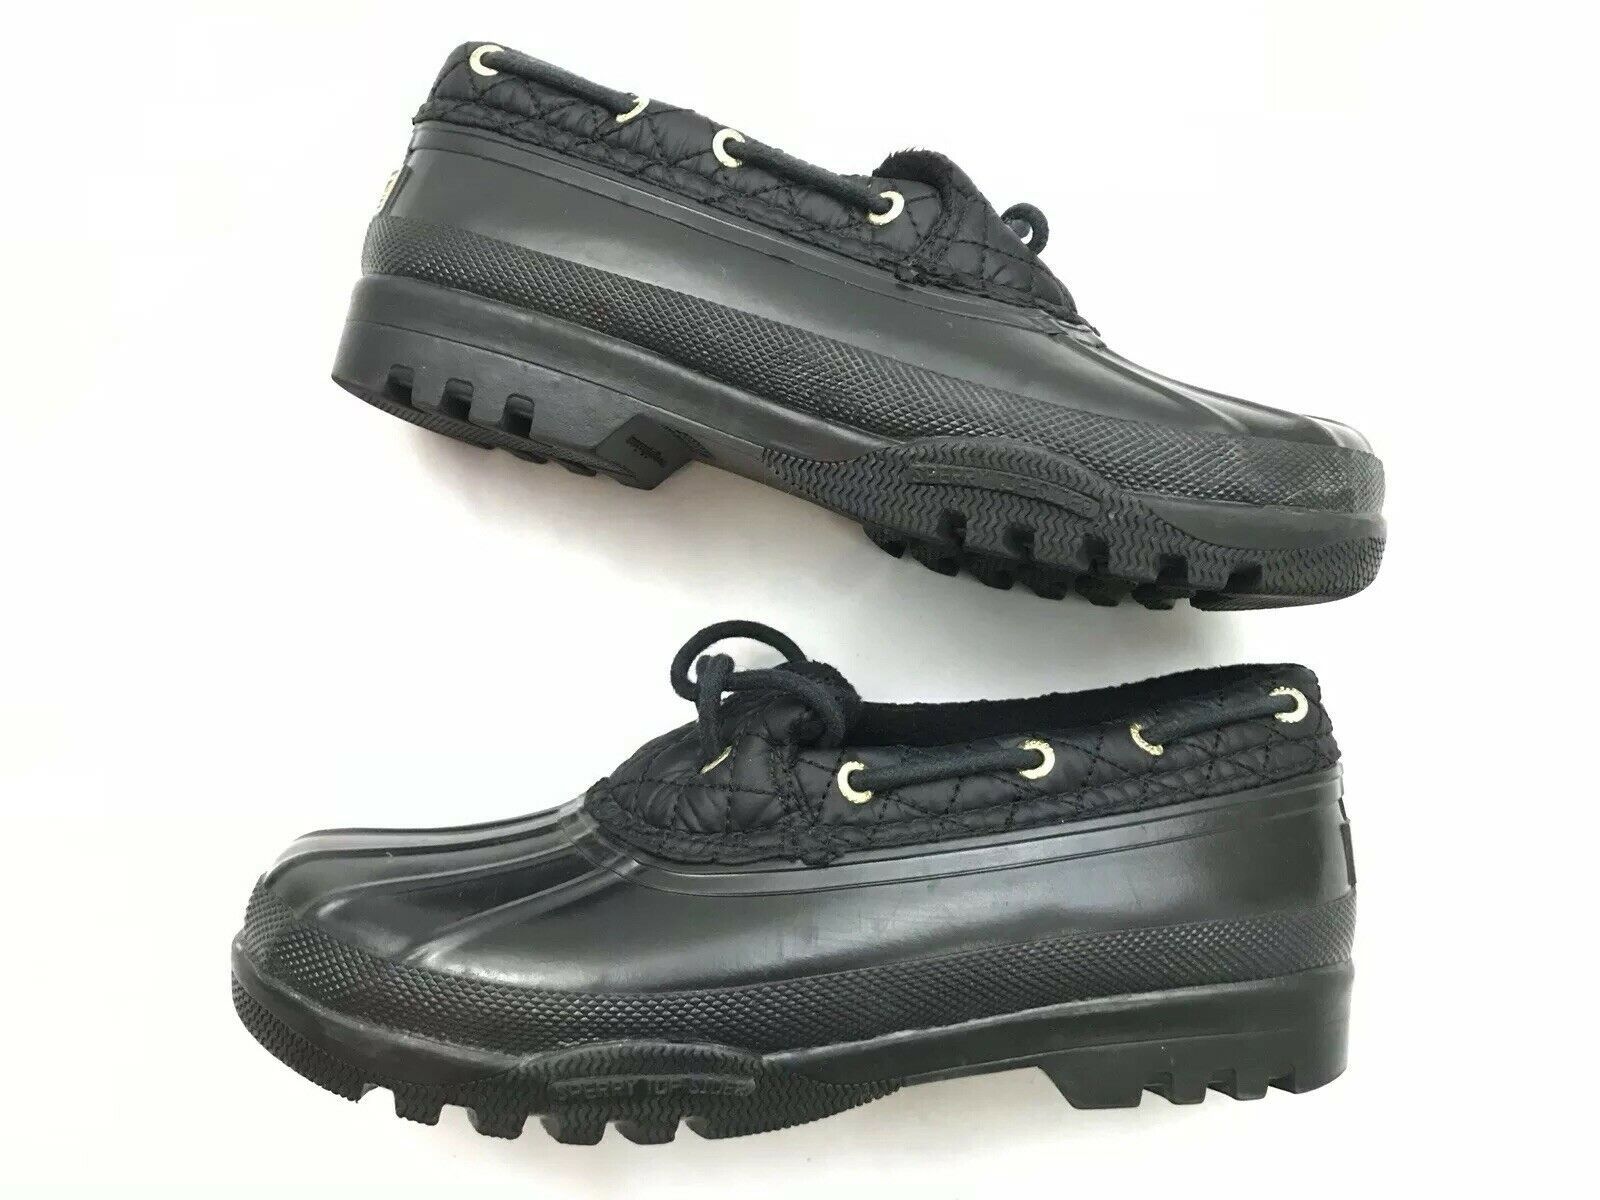 New Black Sperry Top-sider Women's Waterproof Boots-Size 10